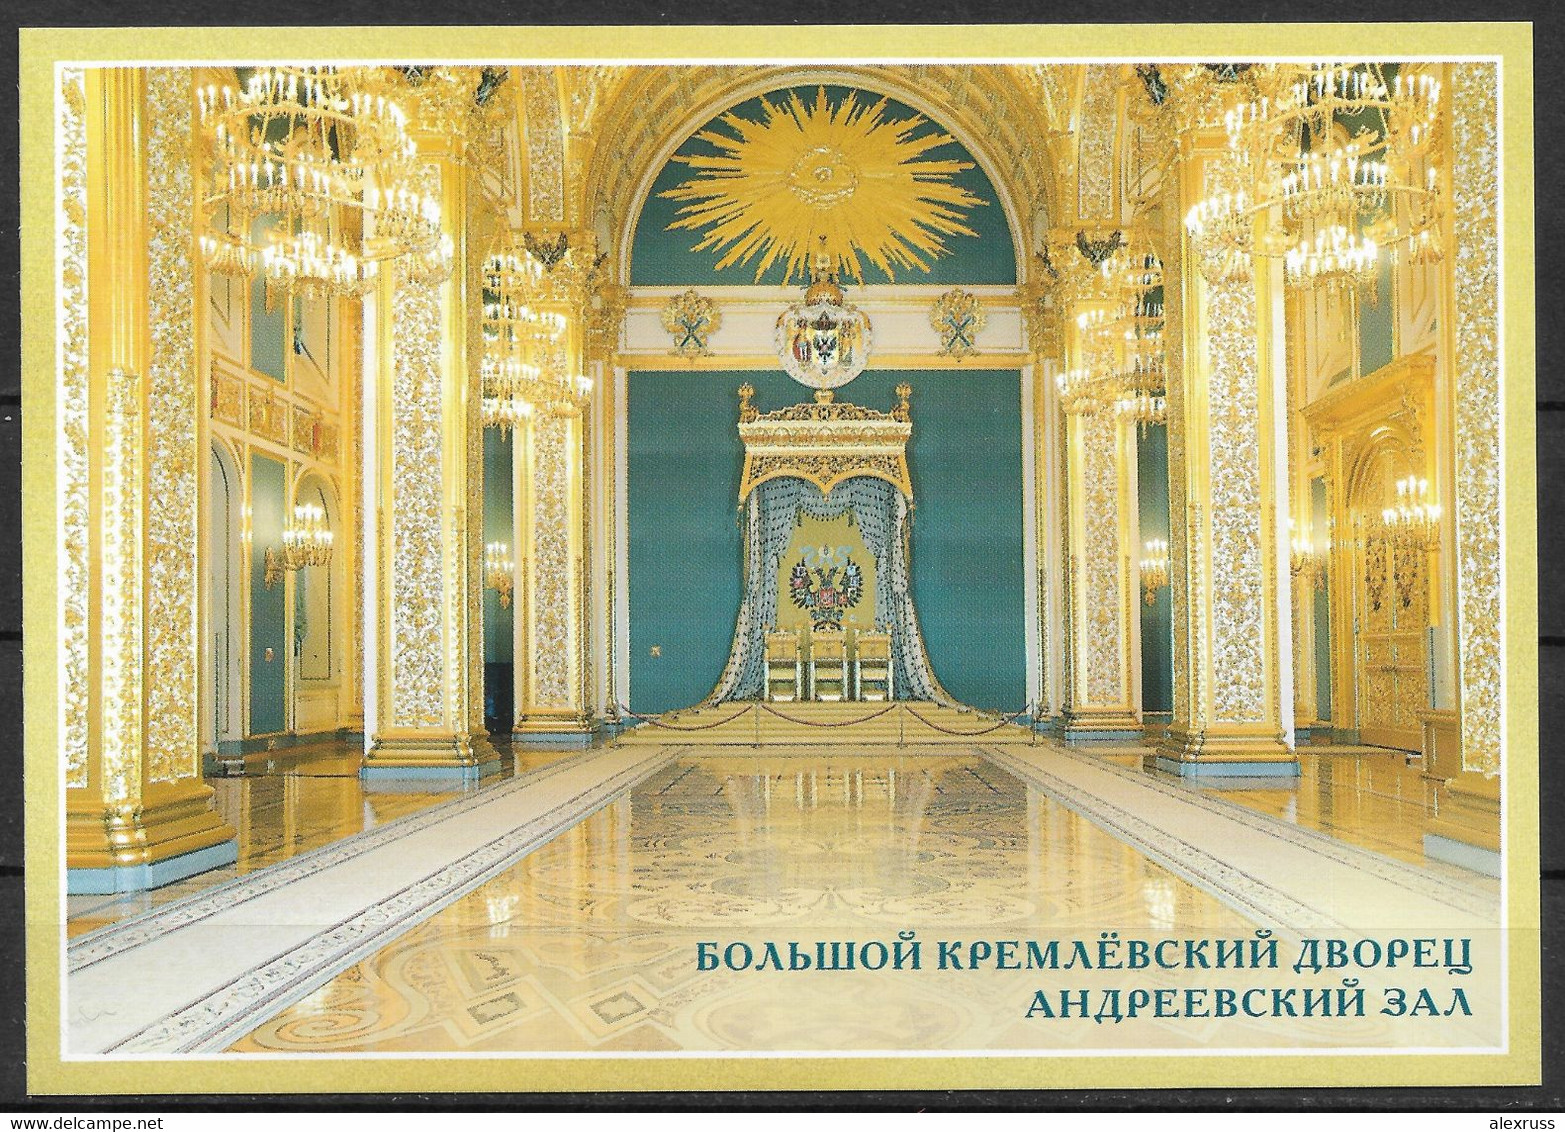 Postcard Russia 2019, Moscow Kremlin, Palace Interior, Hall Of St. Andrew, XF NEW ! - Ongebruikt